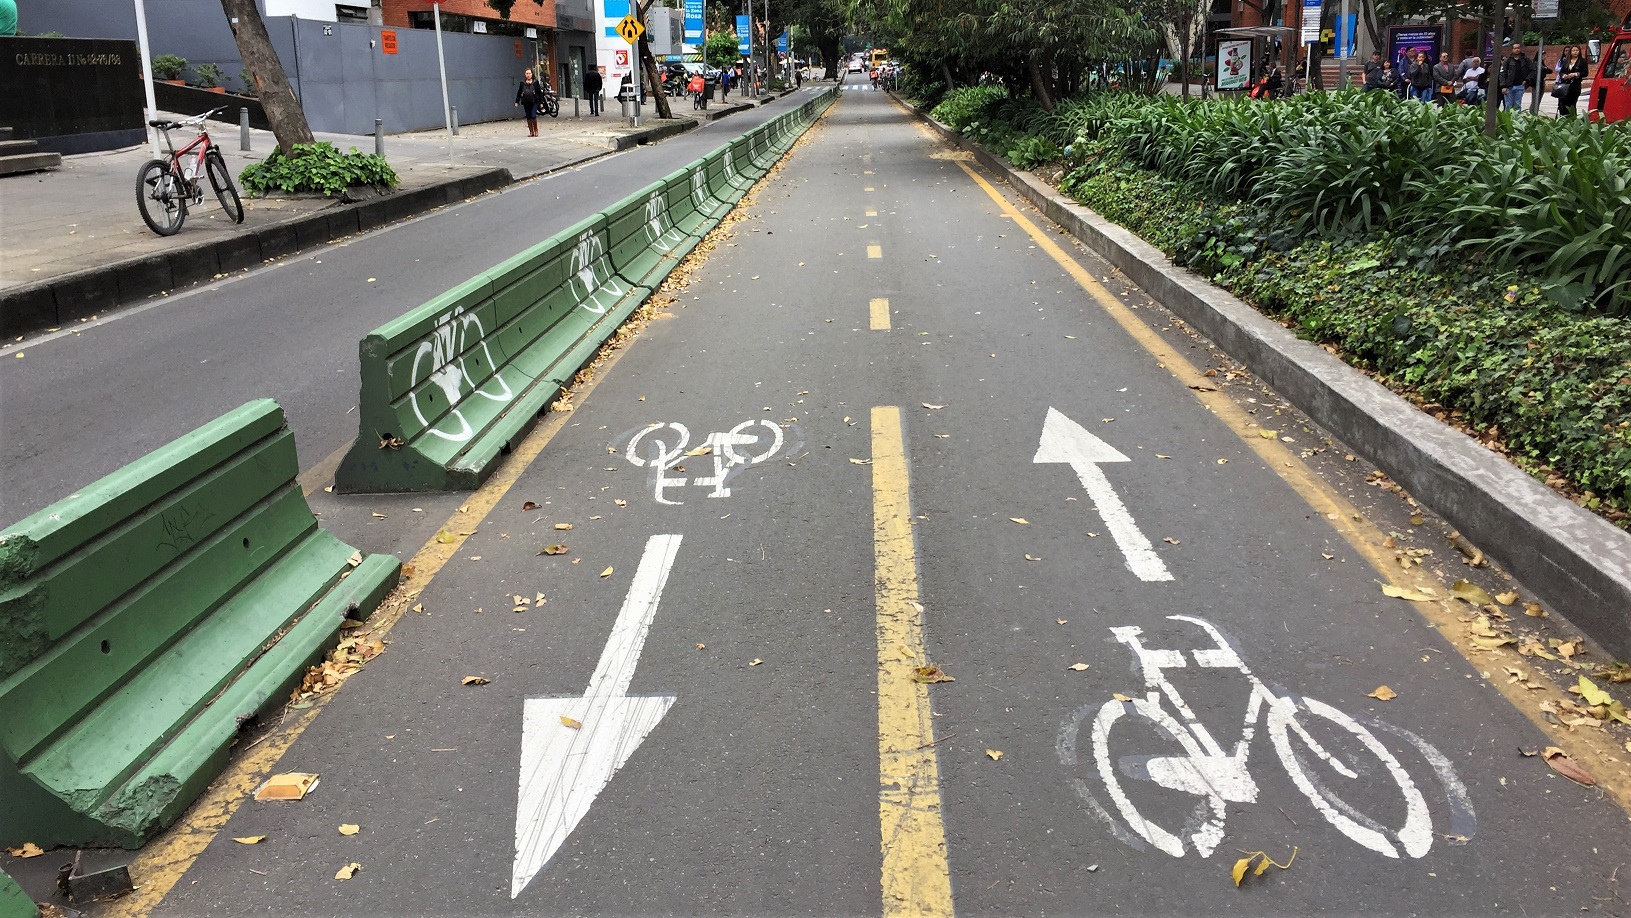 Bogota_bike lanes2